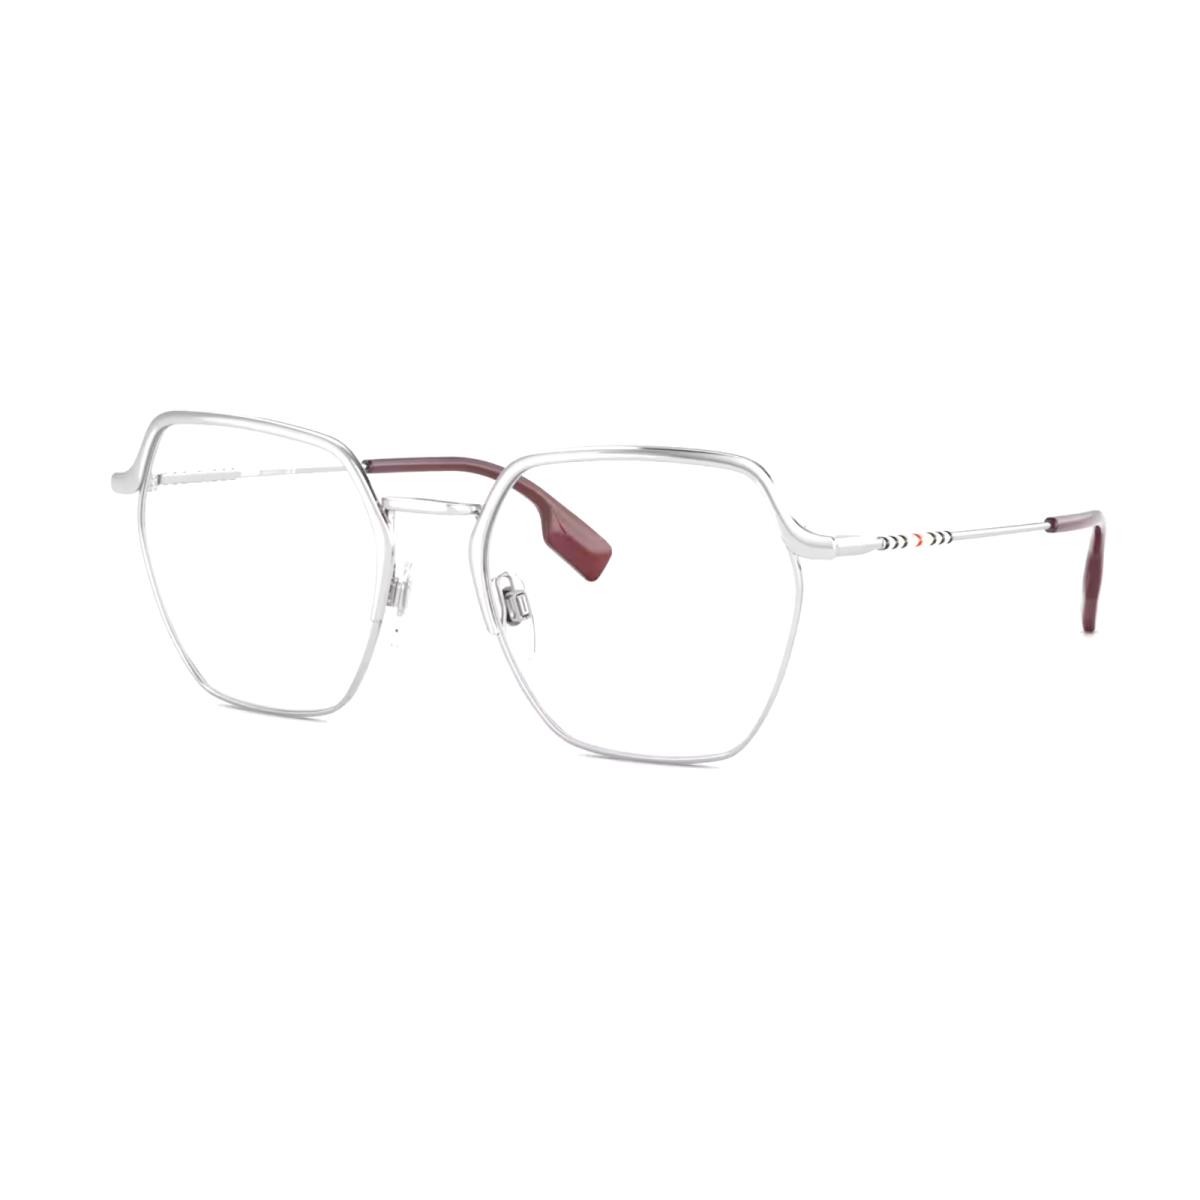 Burberry Angelica Eyeglasses B 1371 1005 52-19 140 Silver Hexagonal Frames - Frame: Silver, Lens: